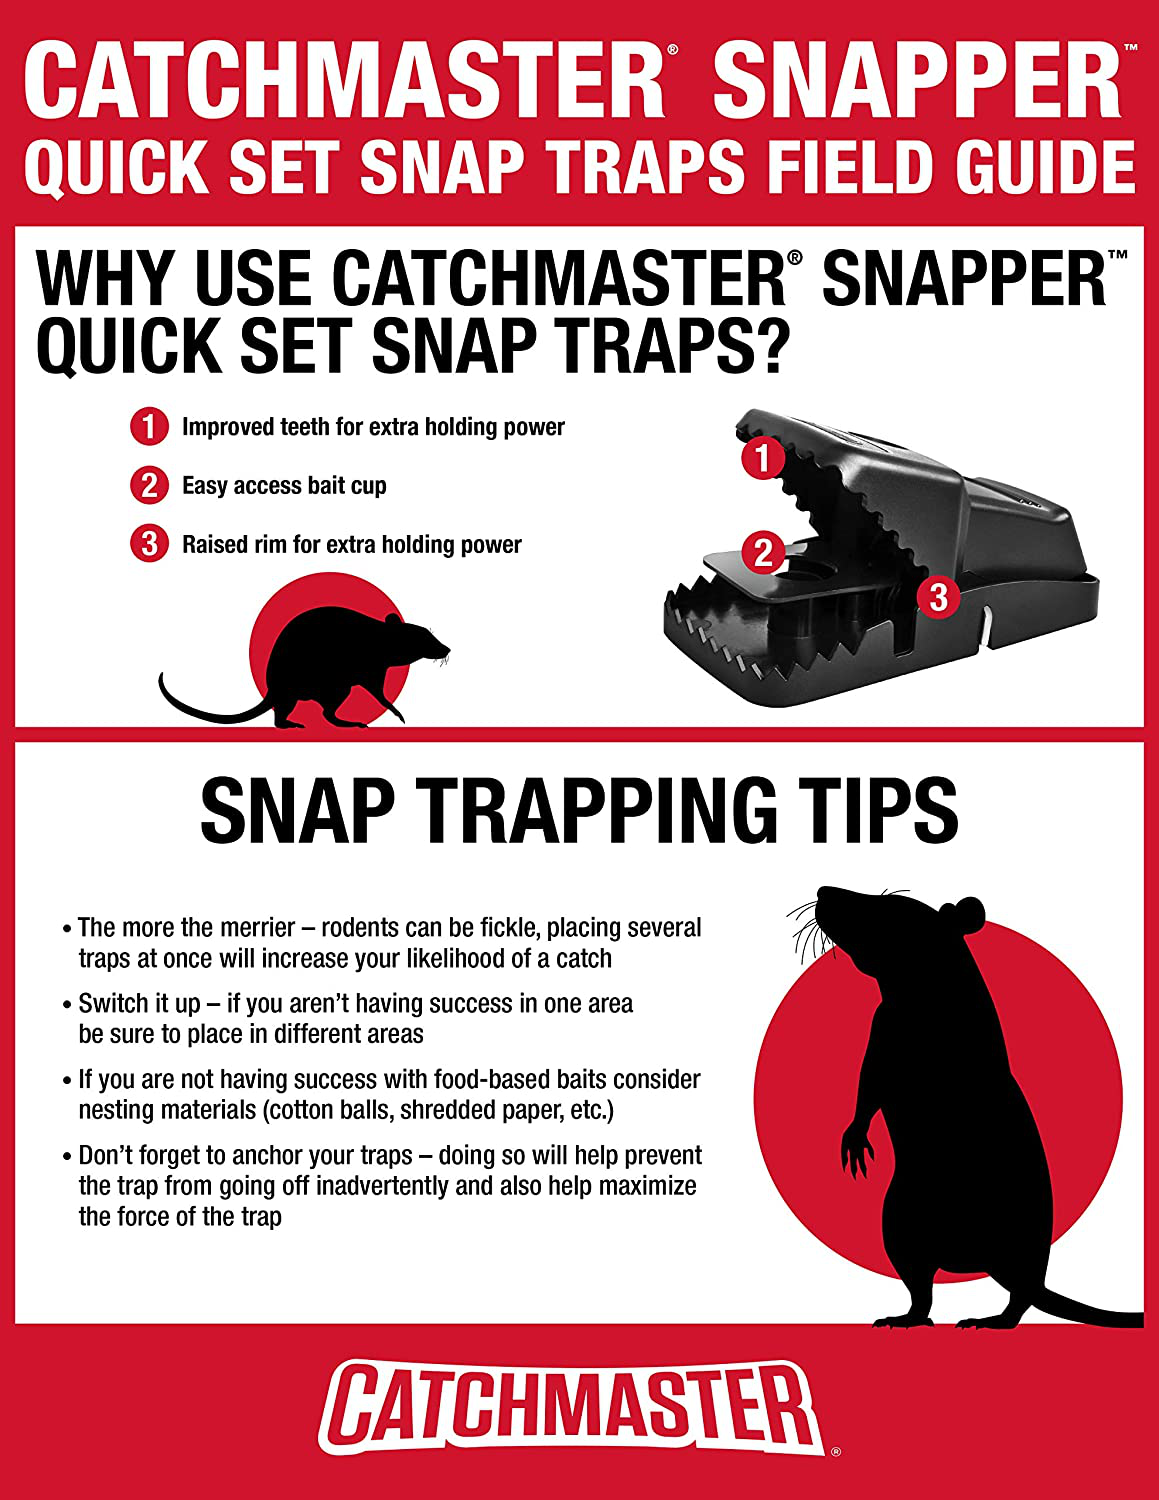 Catchmaster Snapper Quick-Set Reusable Snap Mouse Traps - 6 Pack